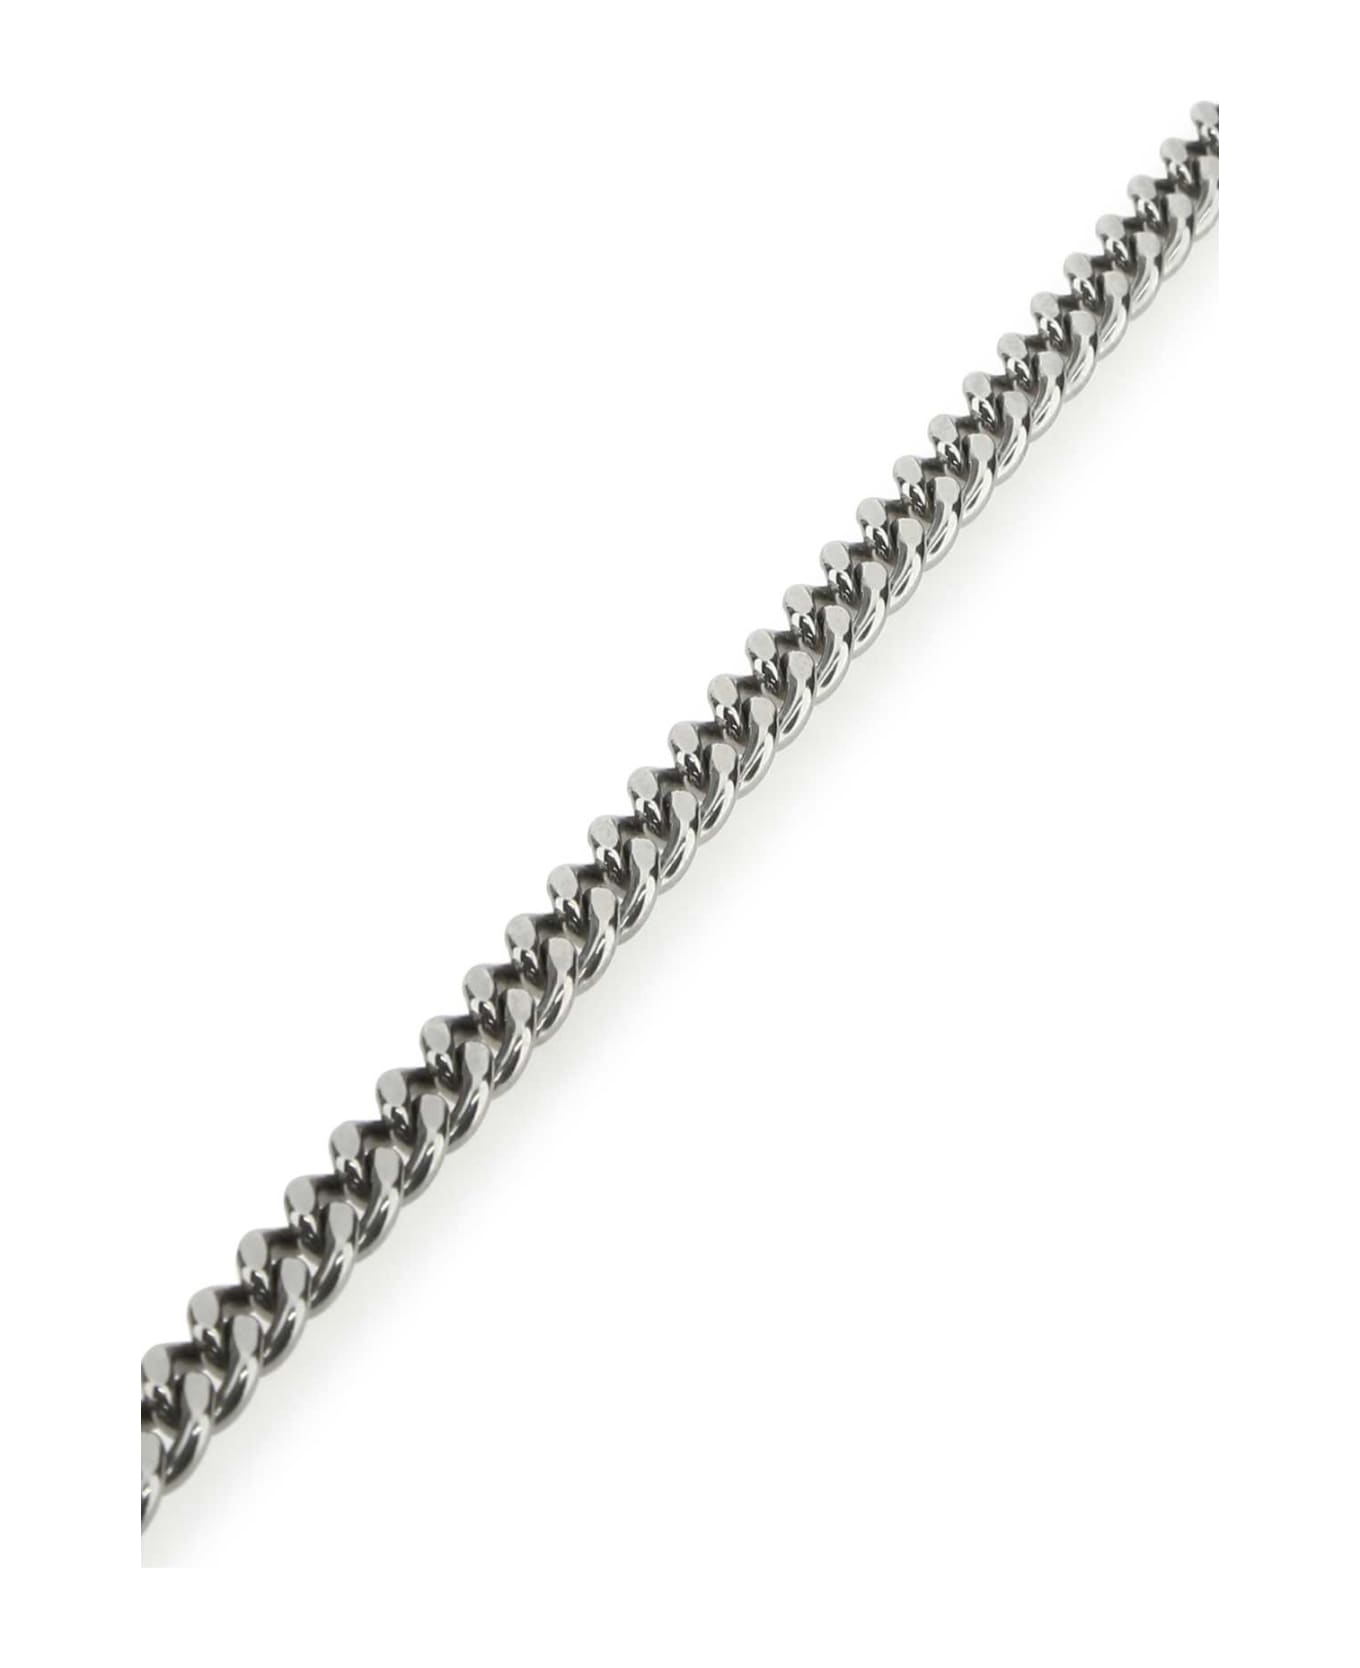 1017 ALYX 9SM Silver Metal Necklace - GRY0002